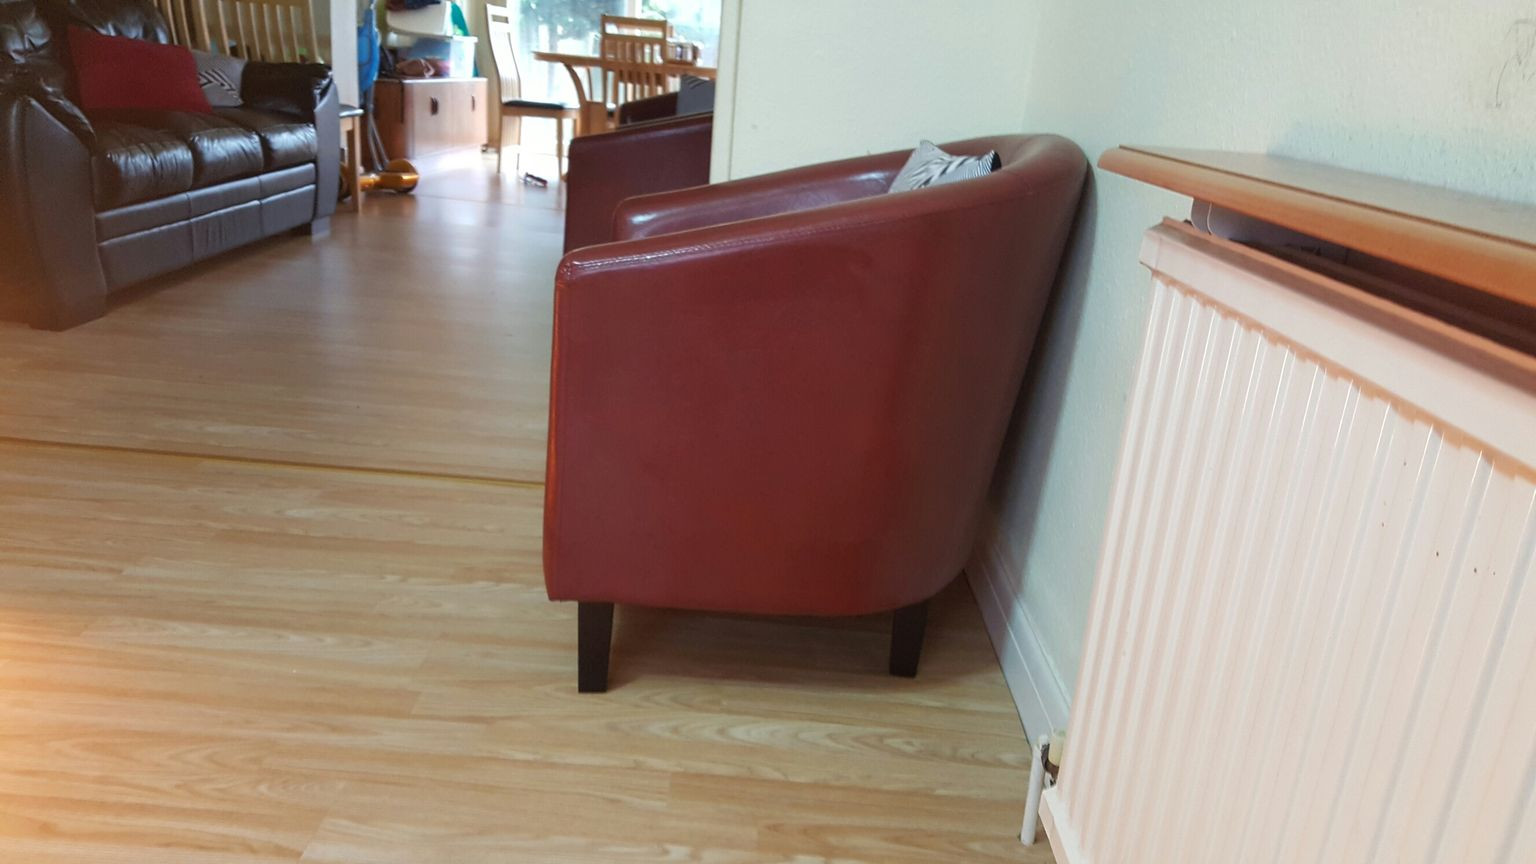 hardwood floor refinishing easton pa of https en shpock com i wnvflguijqigmhej 2017 11 25t203102 for red leather sofa chairs 4